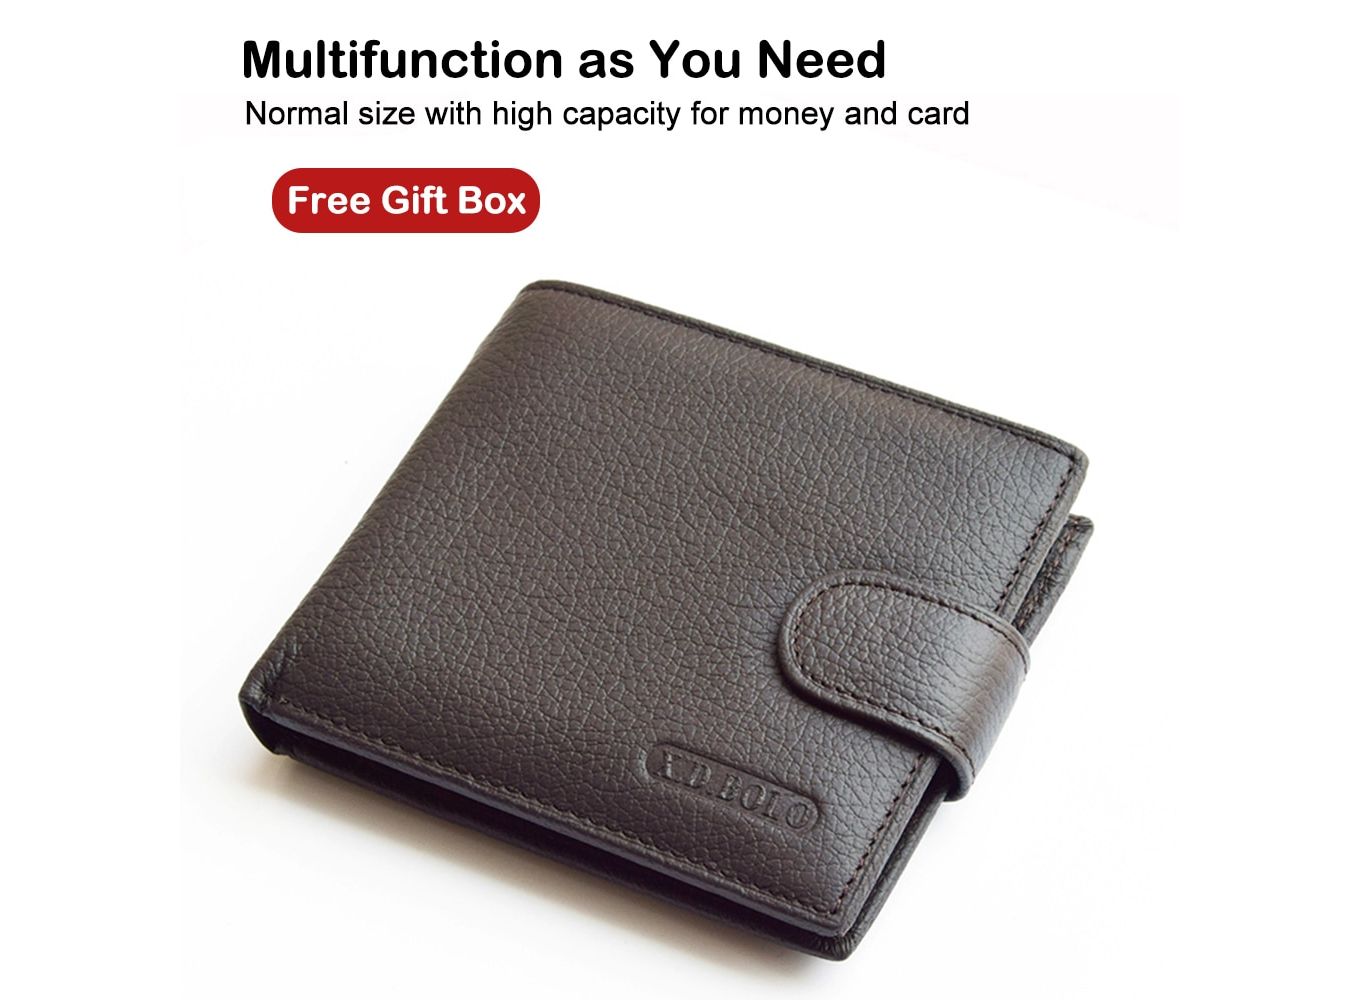 Mens Genuine Leather Vintage Wallet: Stylish Pocket For Cards, Cash And  More 7288276k From Gvnml, $32.44 | DHgate.Com